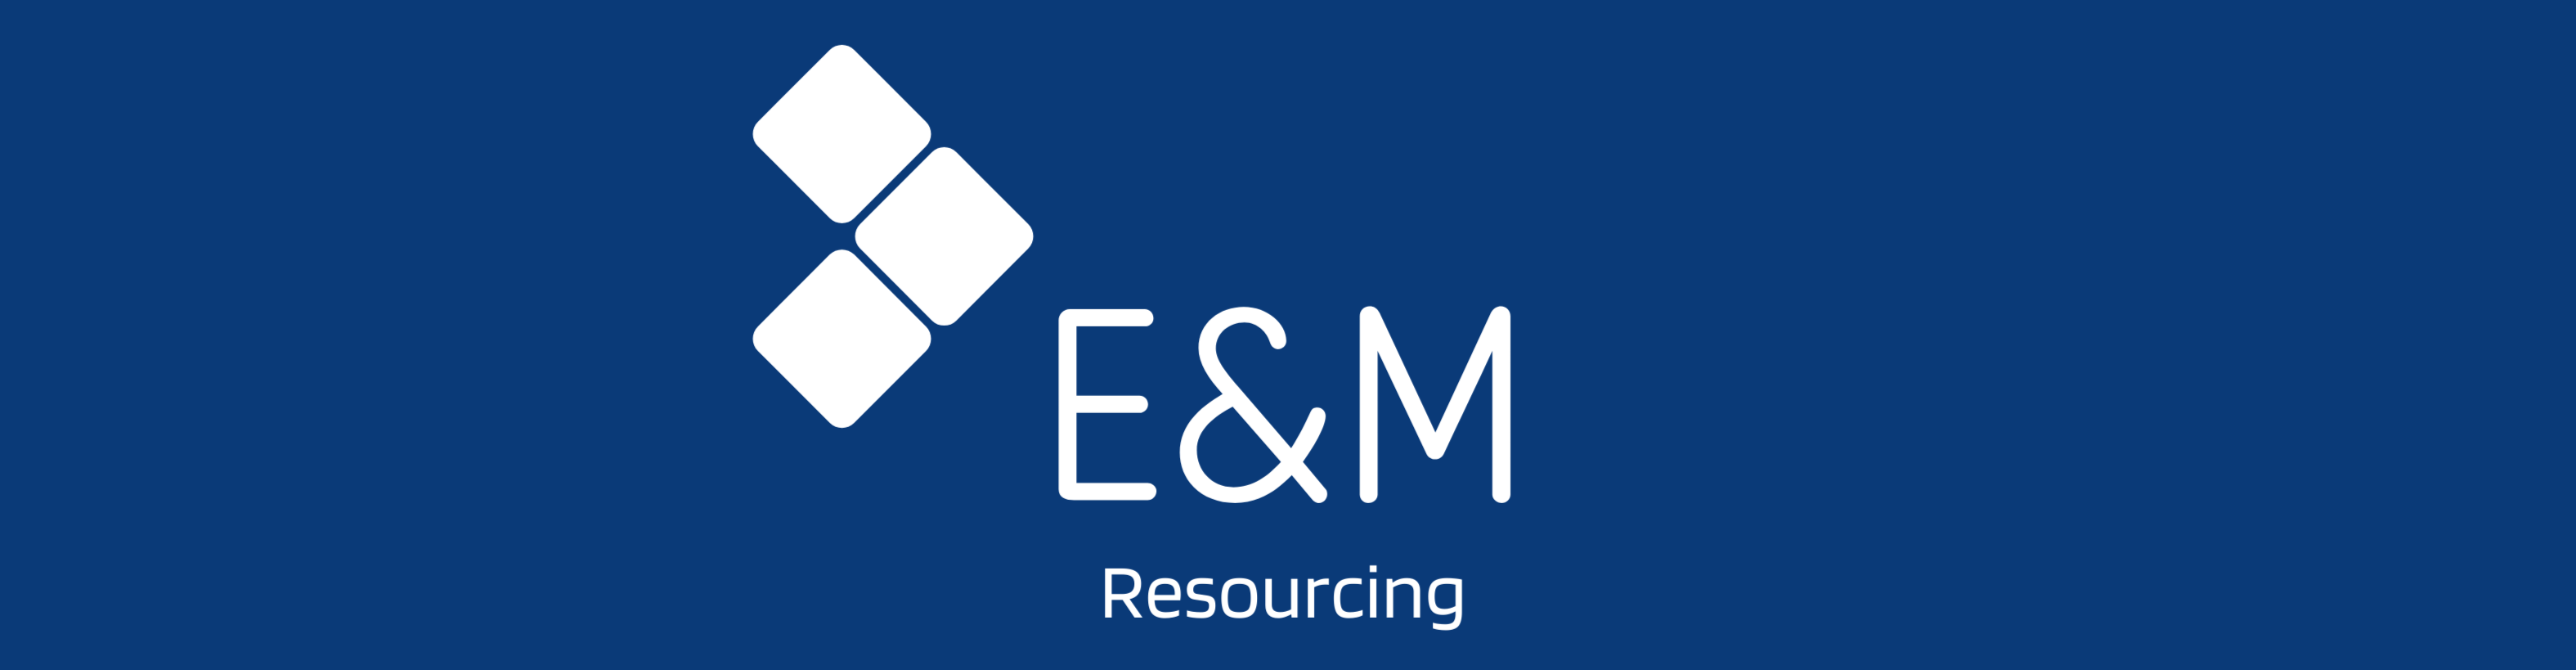 E&M Resourcing banner